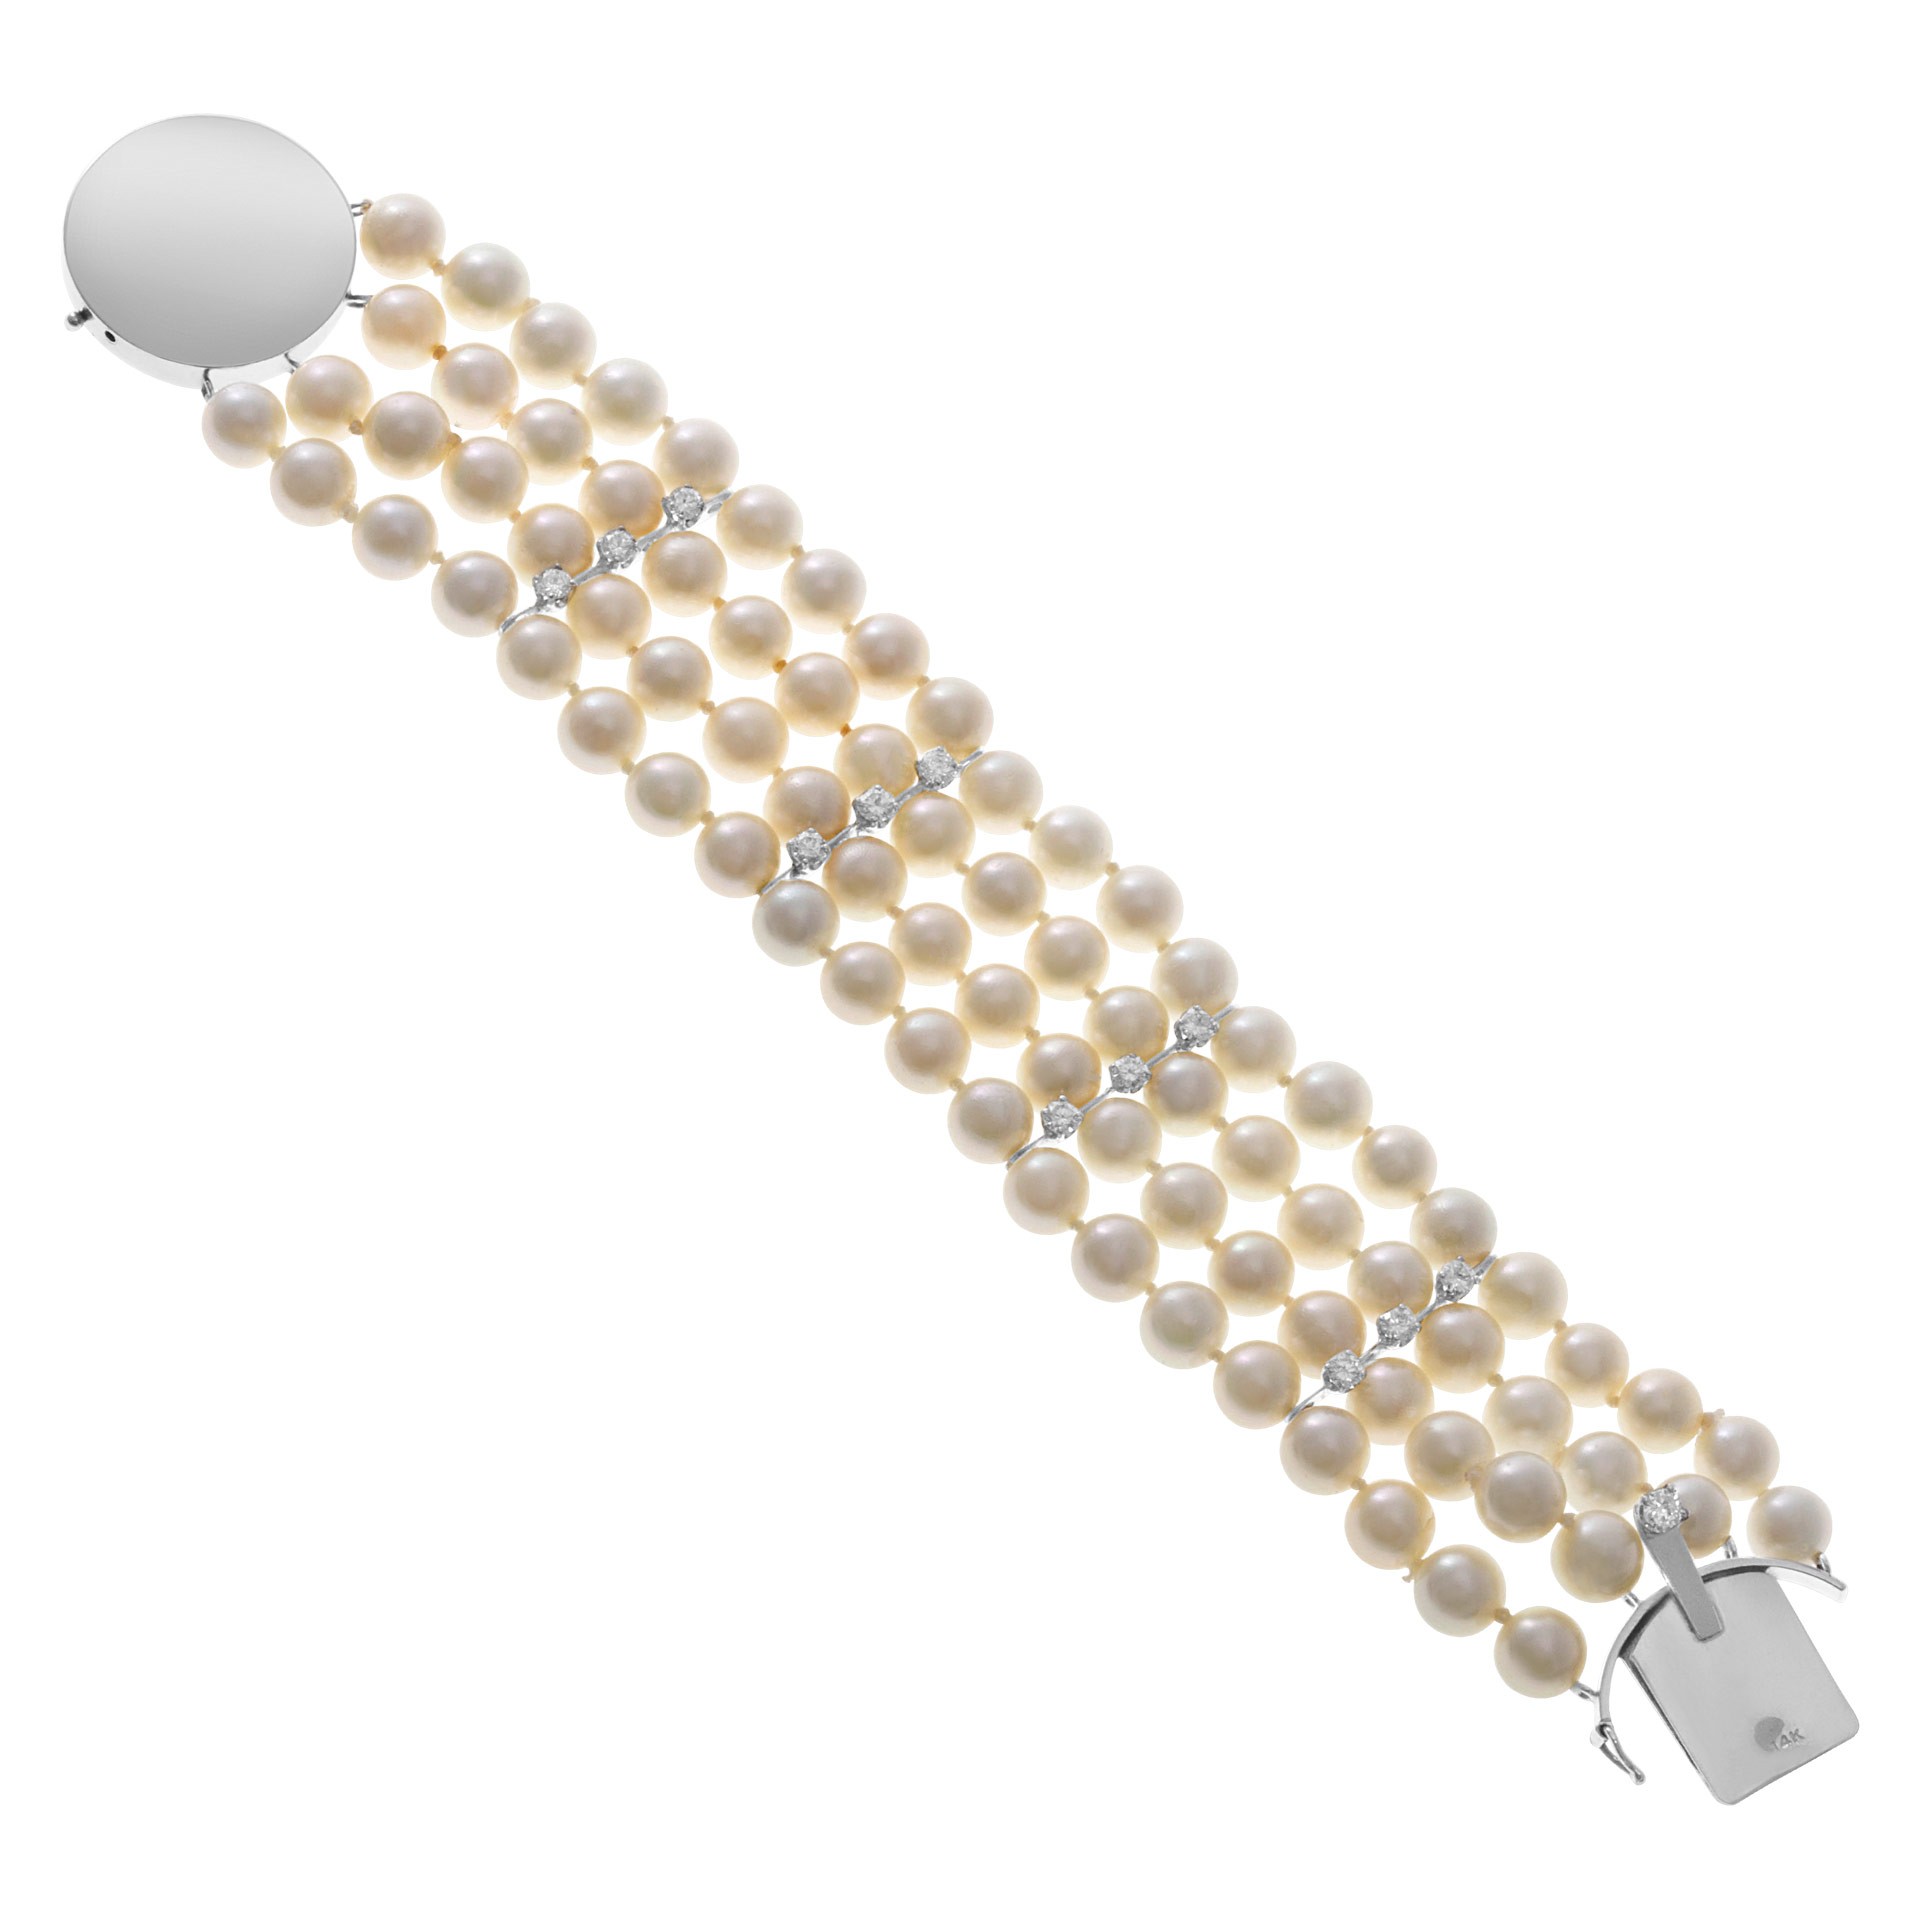 Diamond and Pearl Jewelry: Multistrand Pearl and Diamond Bracelet